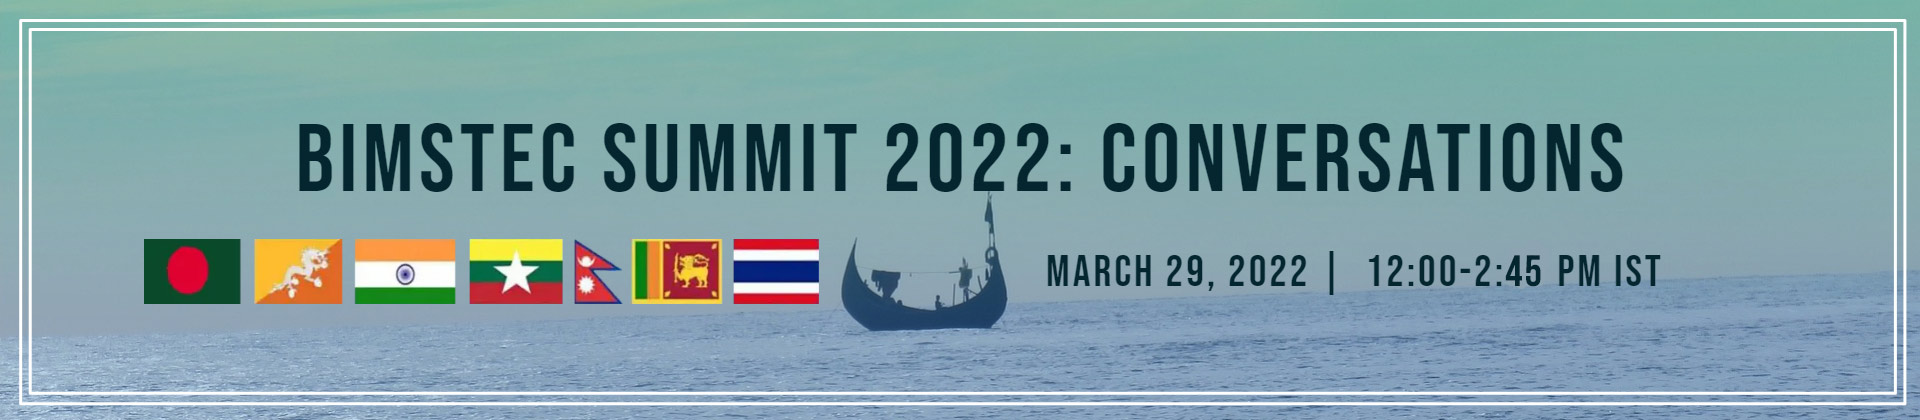 BIMSTEC Summit 2022: Conversations